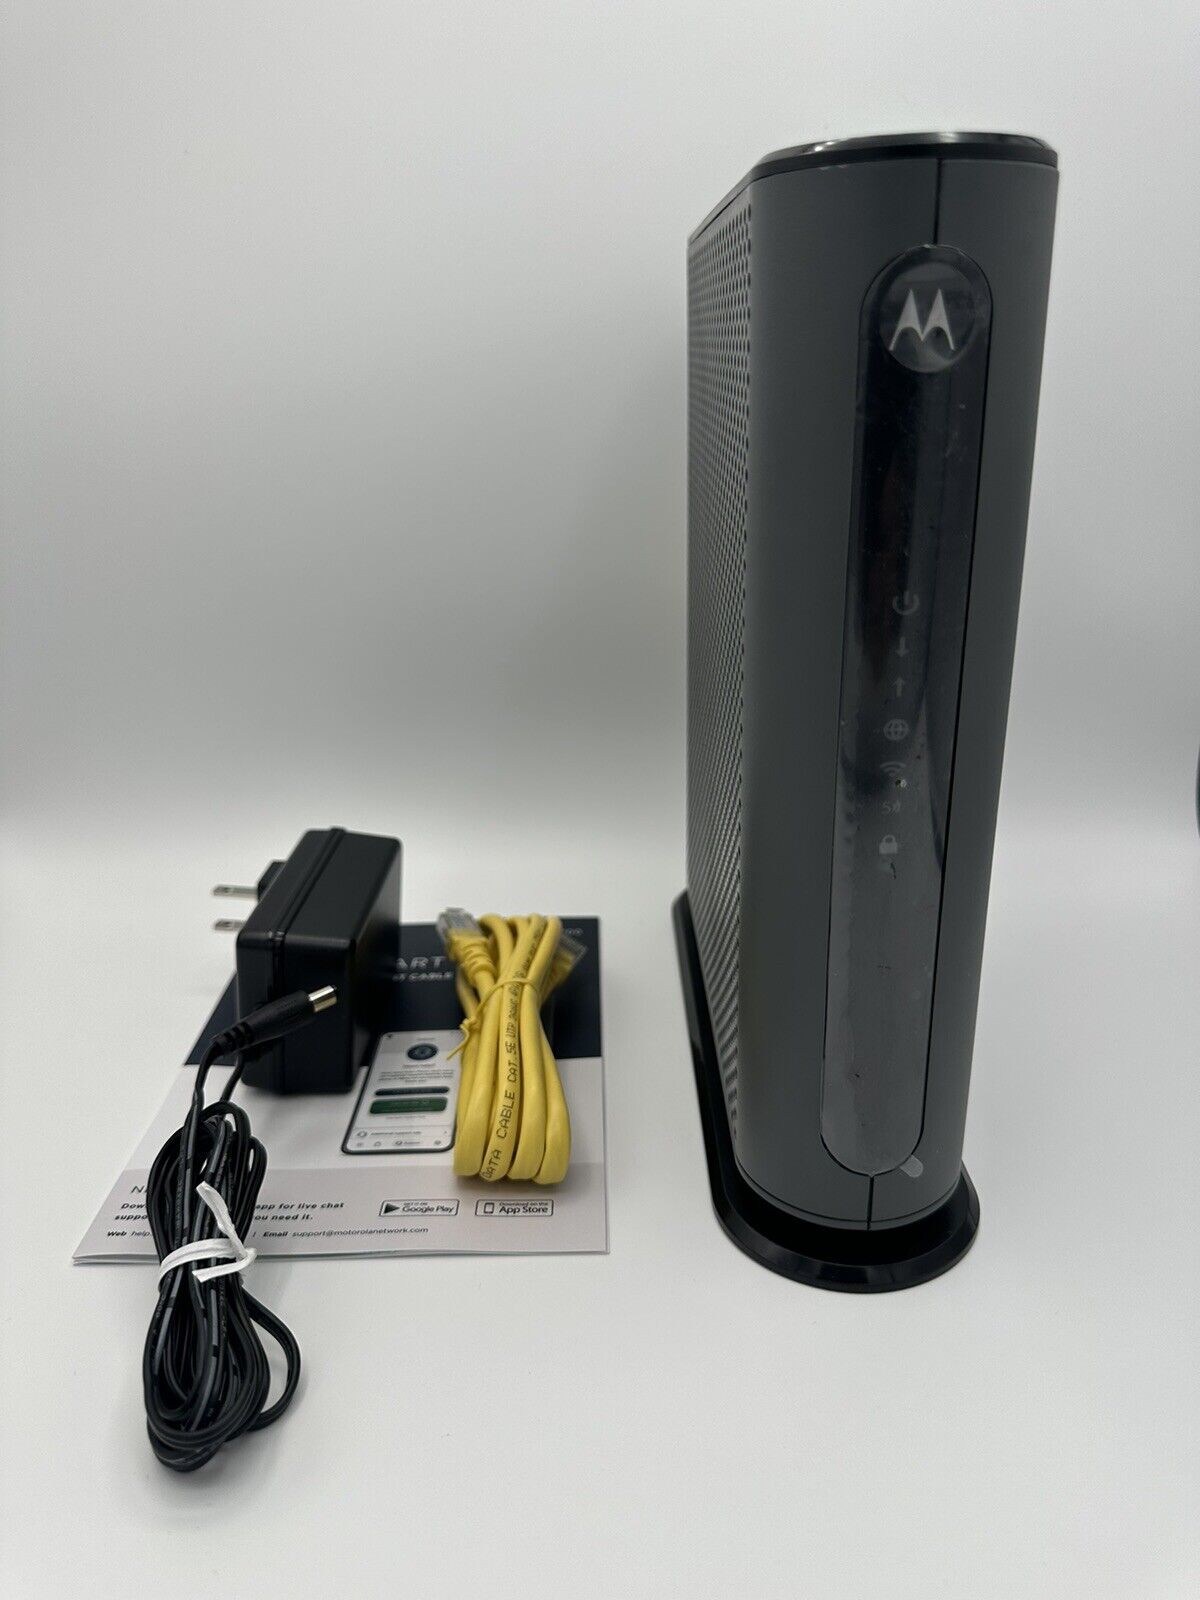 Motorola MG7700 24x8 Cable Modem Plus AC1900 Router Gray New No Box